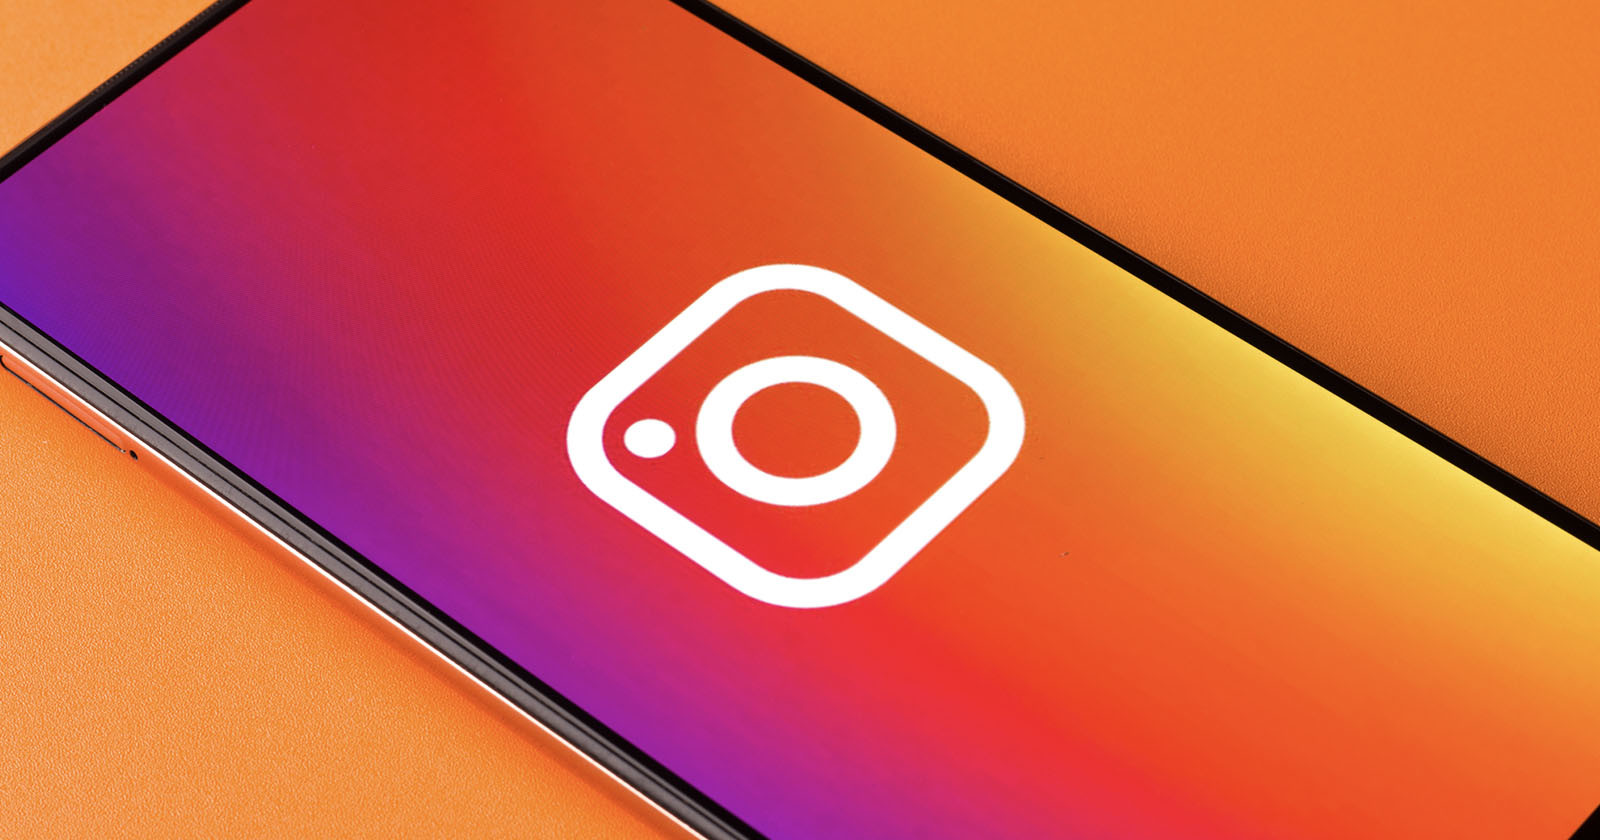  instagram allows users share photos through code 